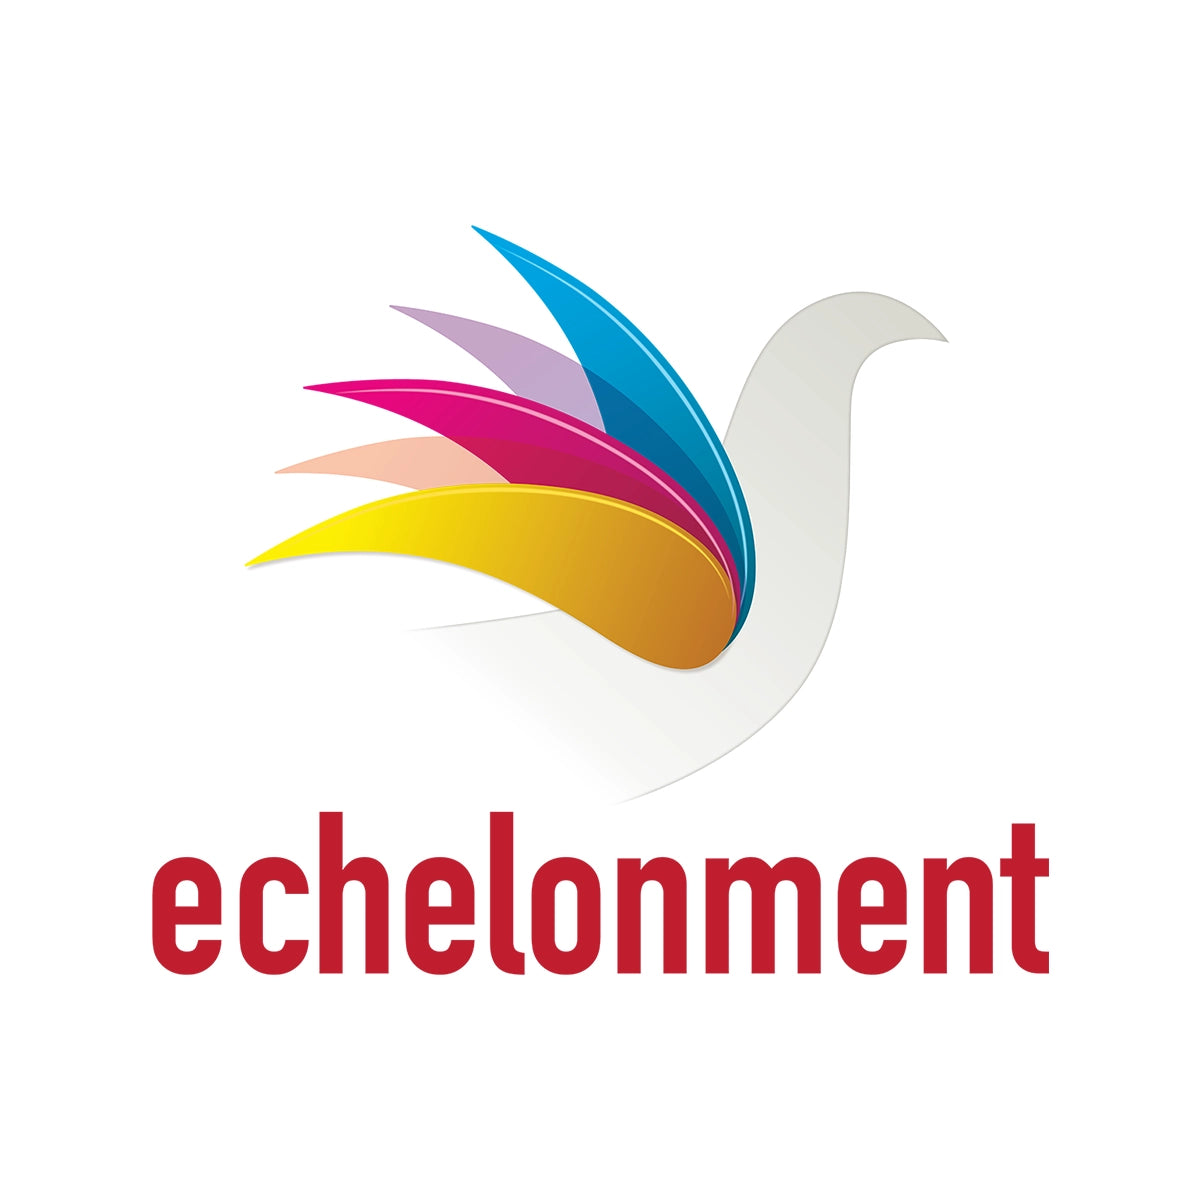 echelonment.com